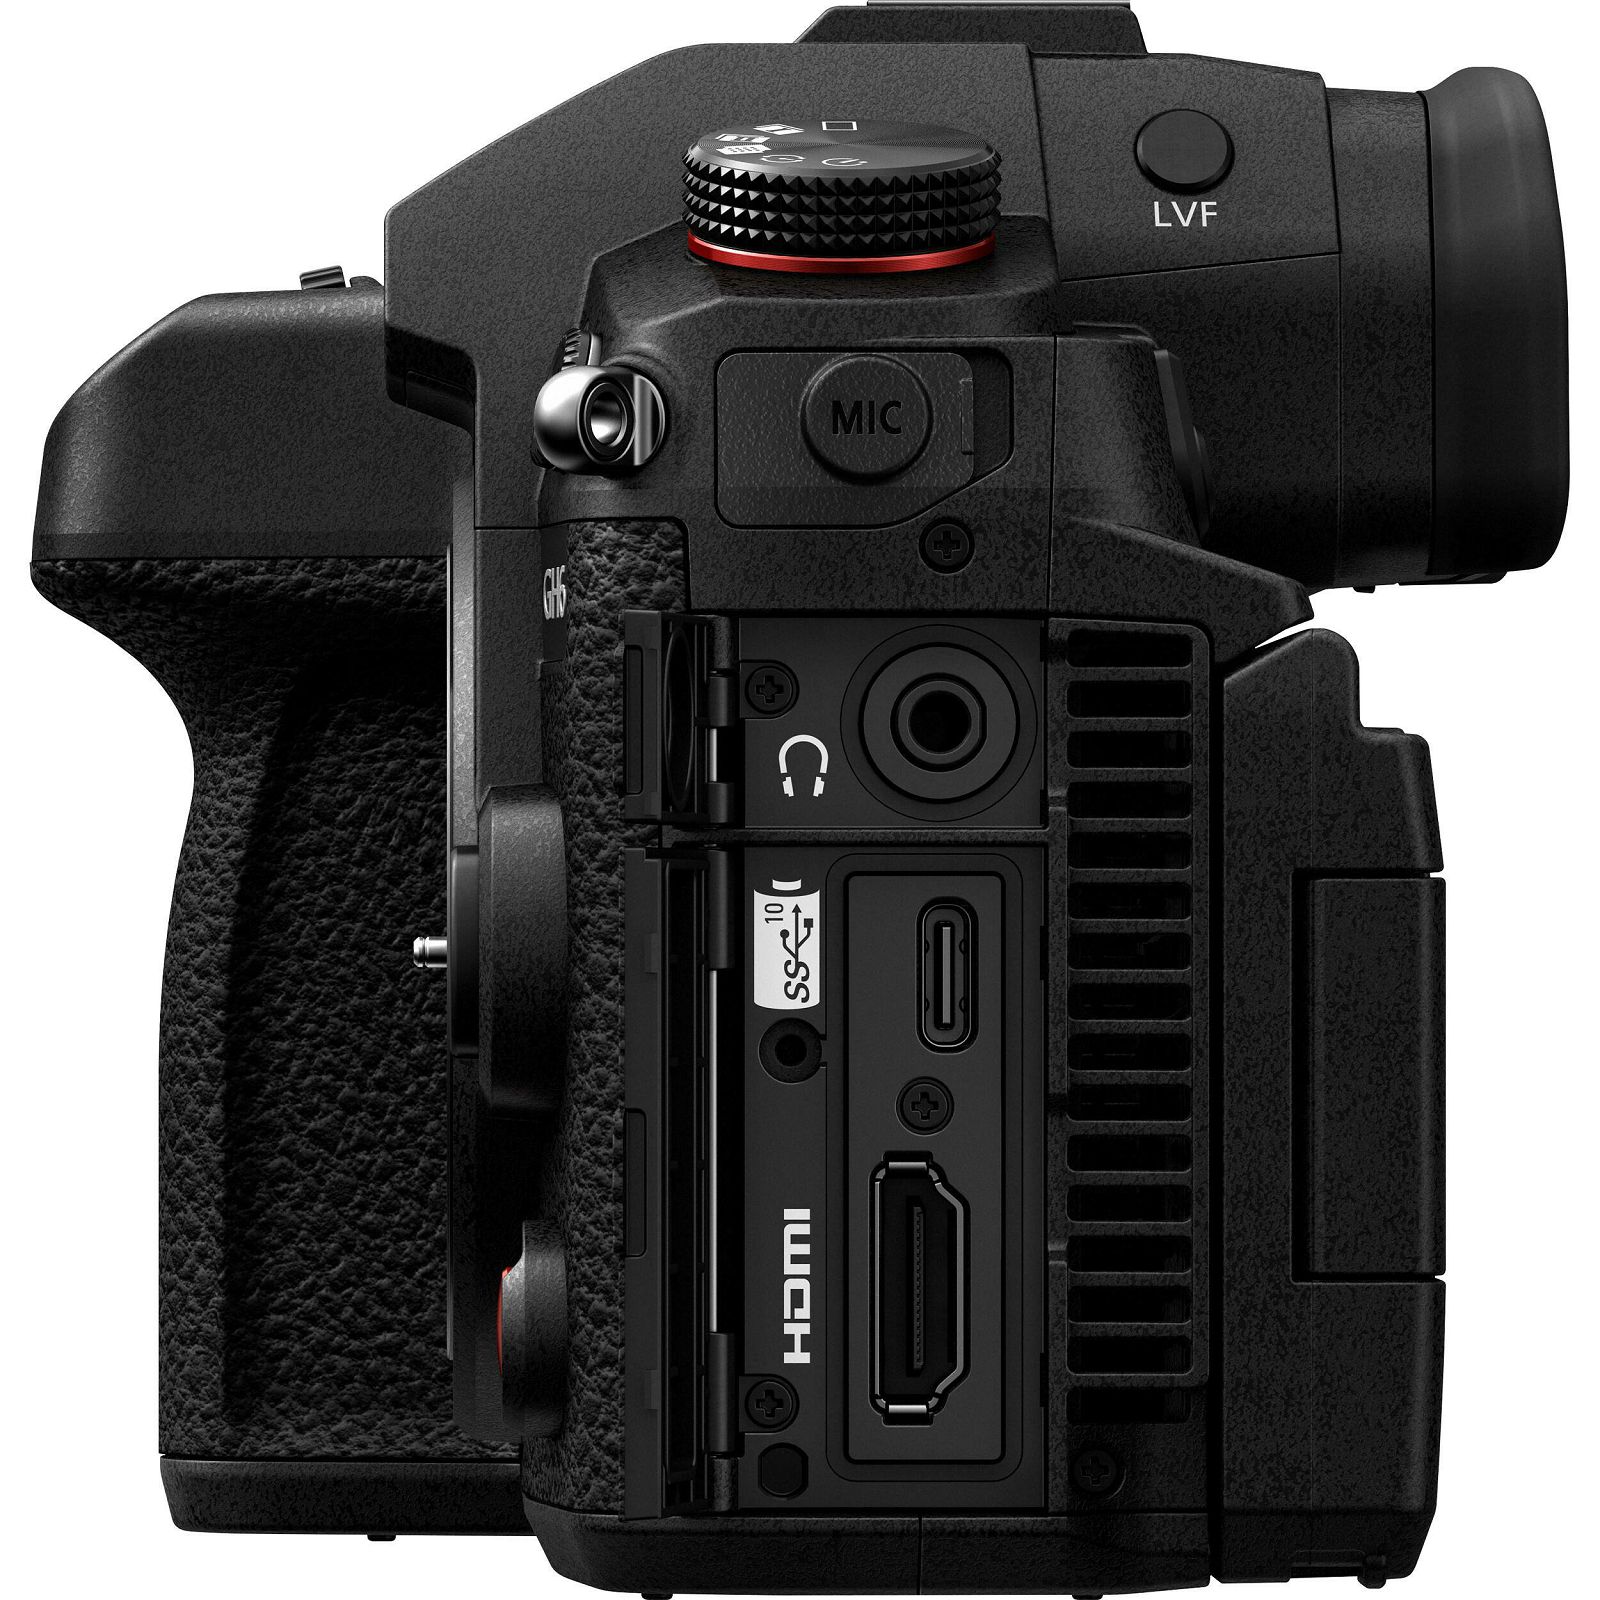 Panasonic Lumix GH6 + 12-60mm f/2.8-4 Asph Power O.I.S. Leica DG Vario-Elmarit (DC-GH6LE)